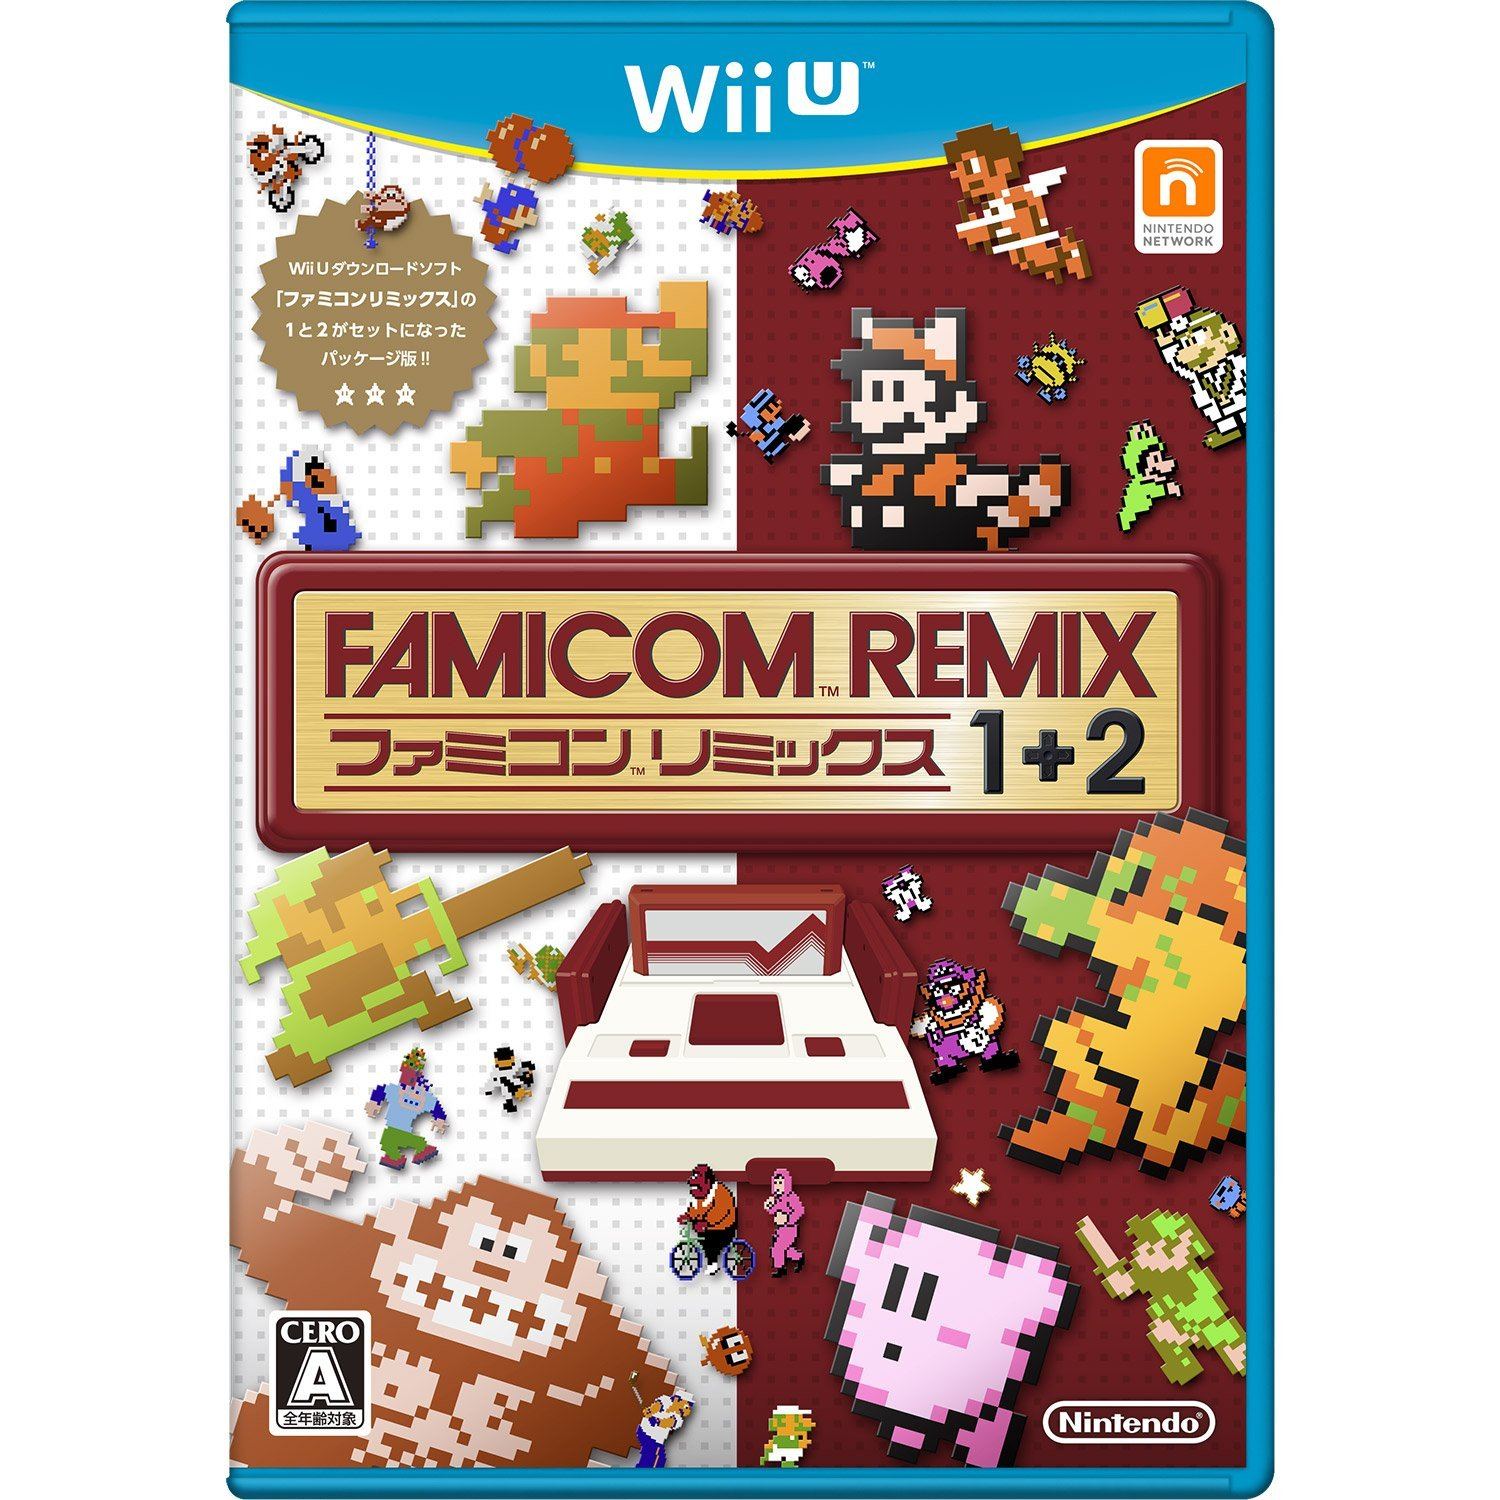 NES Remix Pack (Nintendo Wii U, 2014) Game Nintendo Selects